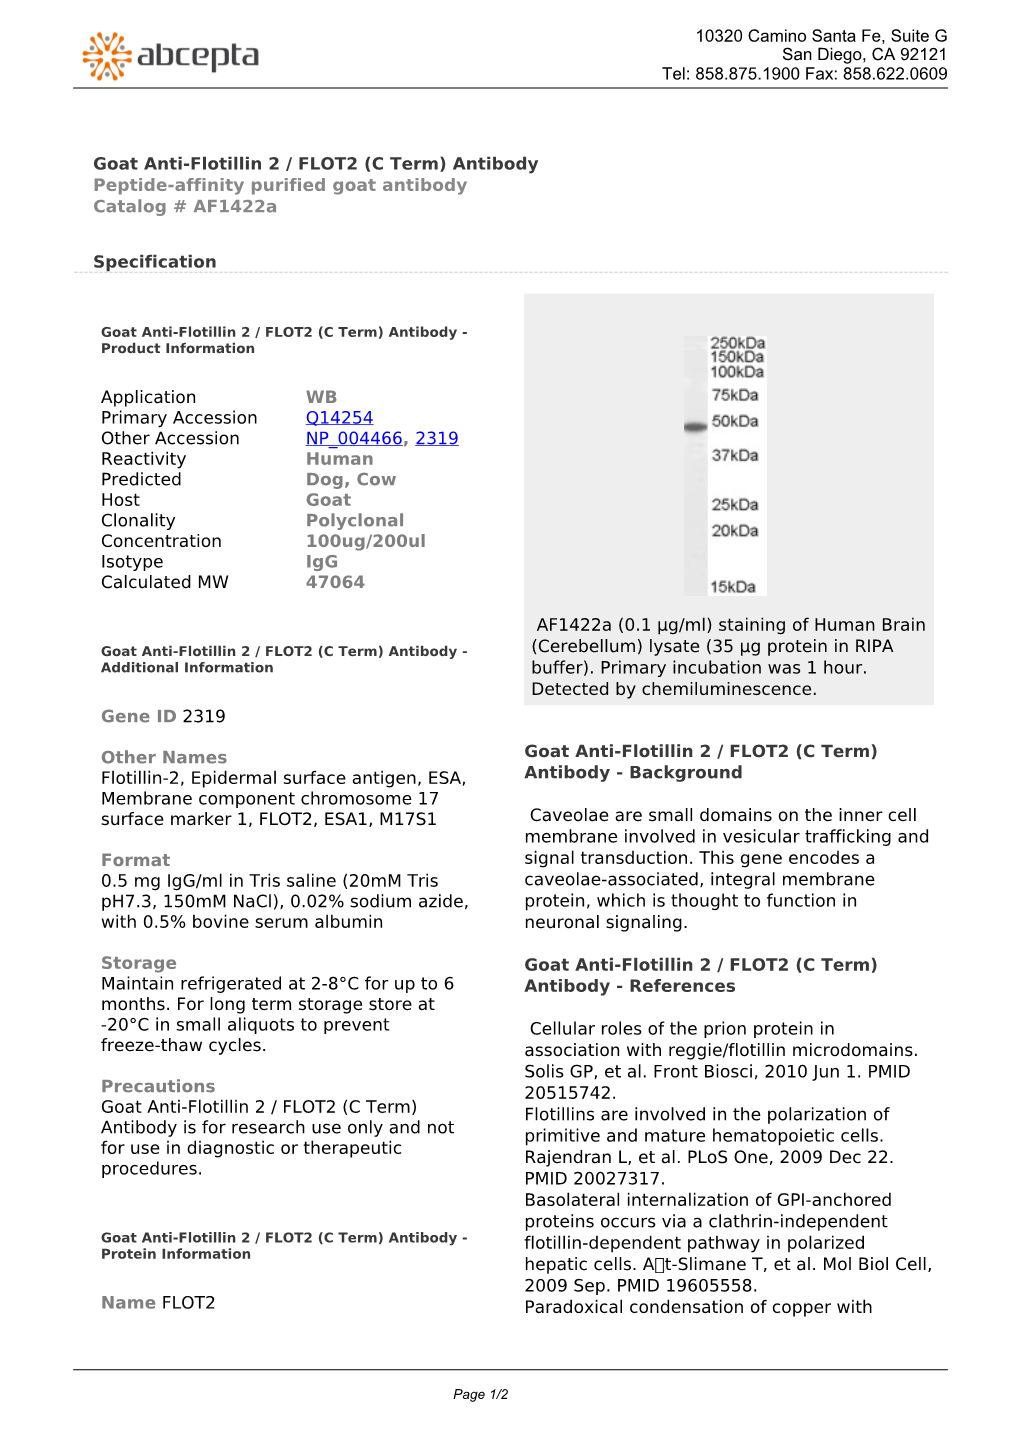 Goat Anti-Flotillin 2 / FLOT2 (C Term) Antibody Peptide-Affinity Purified Goat Antibody Catalog # Af1422a